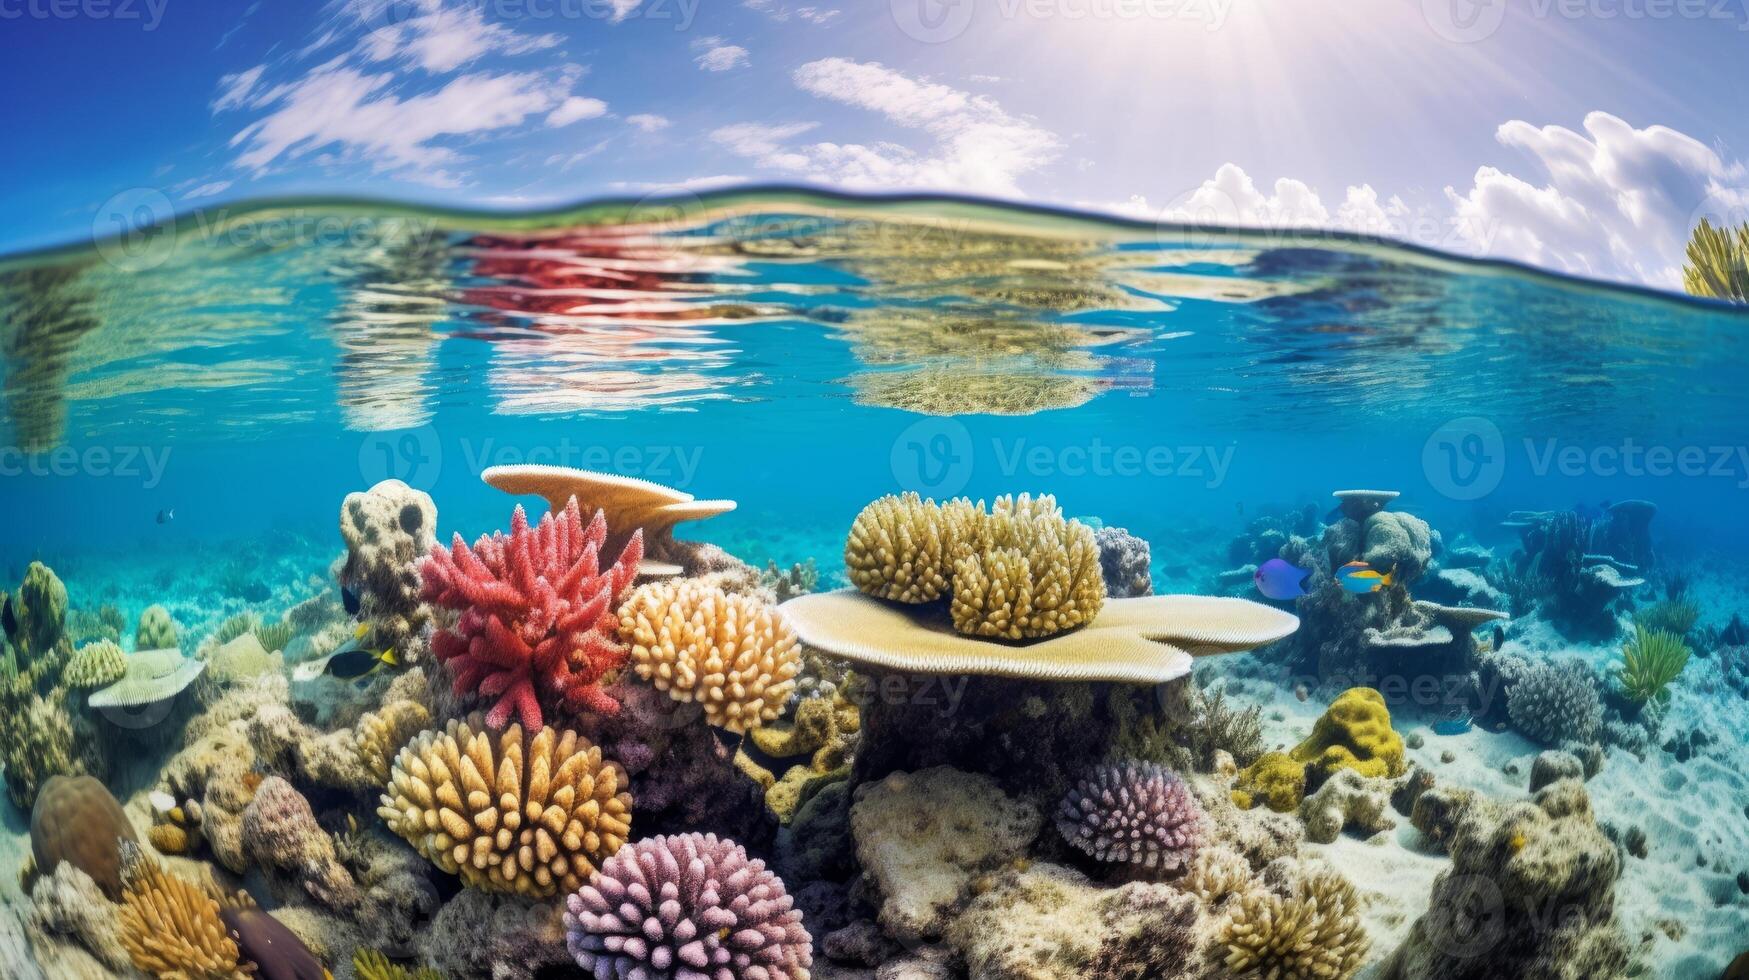 ai gerado a surreal beleza do a embaixo da agua coral recife foto